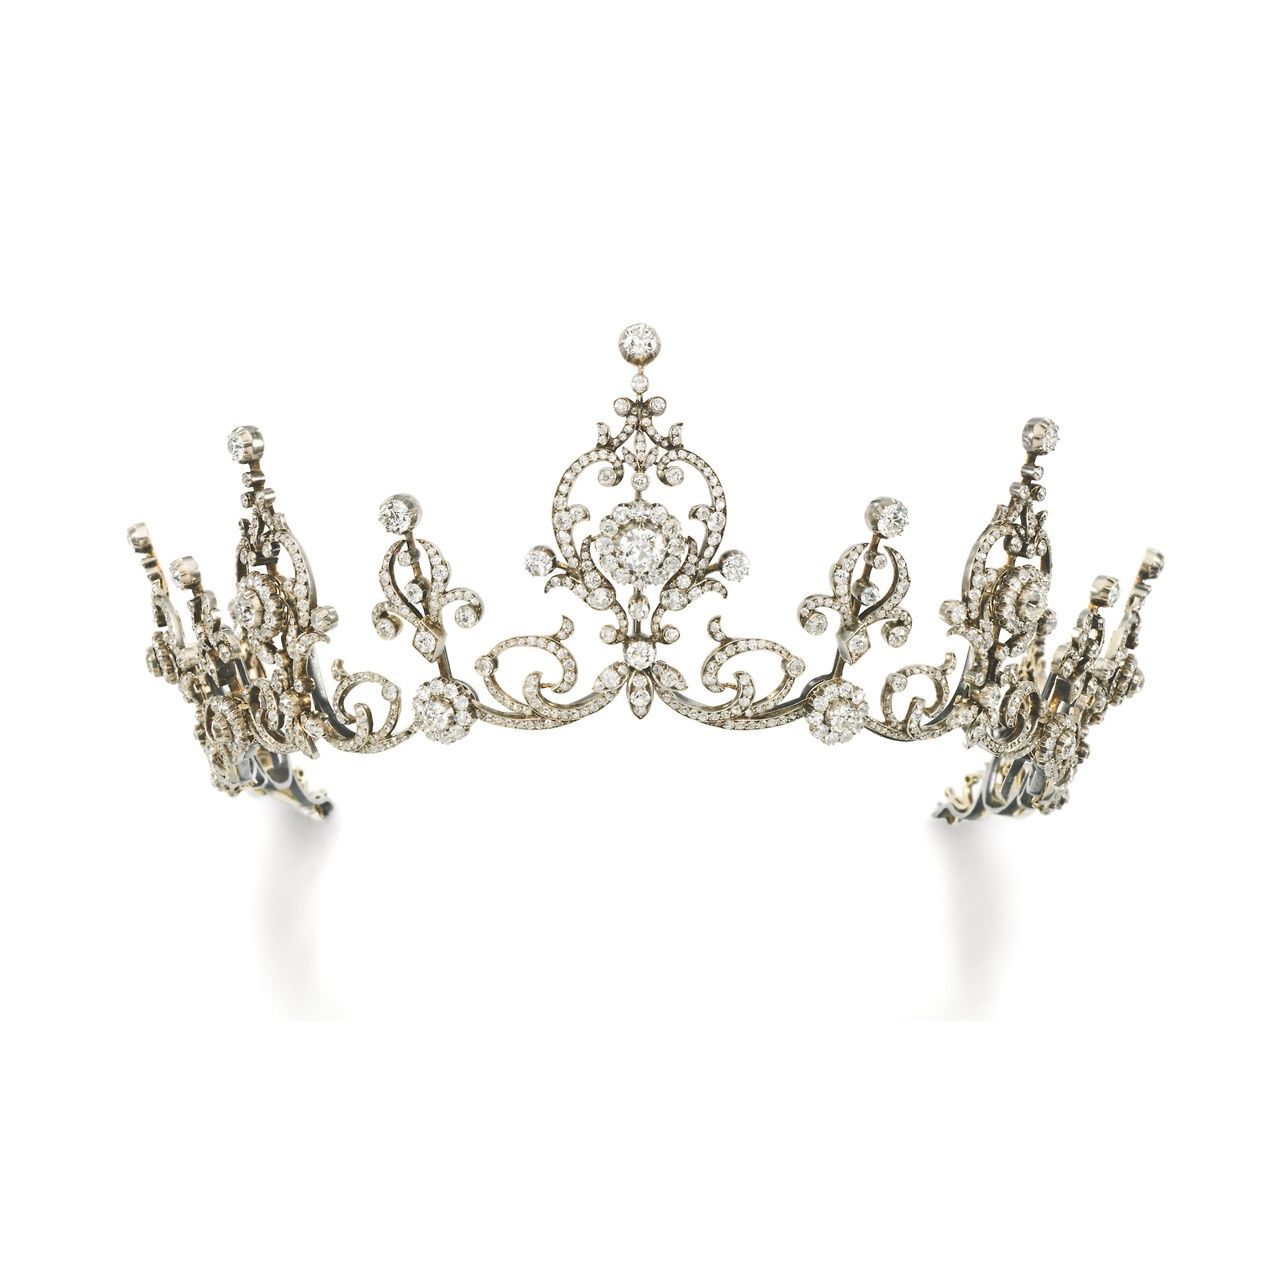 Diamond tiara. Circa 1900s  Via Sothebys. – for when they finally tell me I’m a princess of some land never heard of lol!